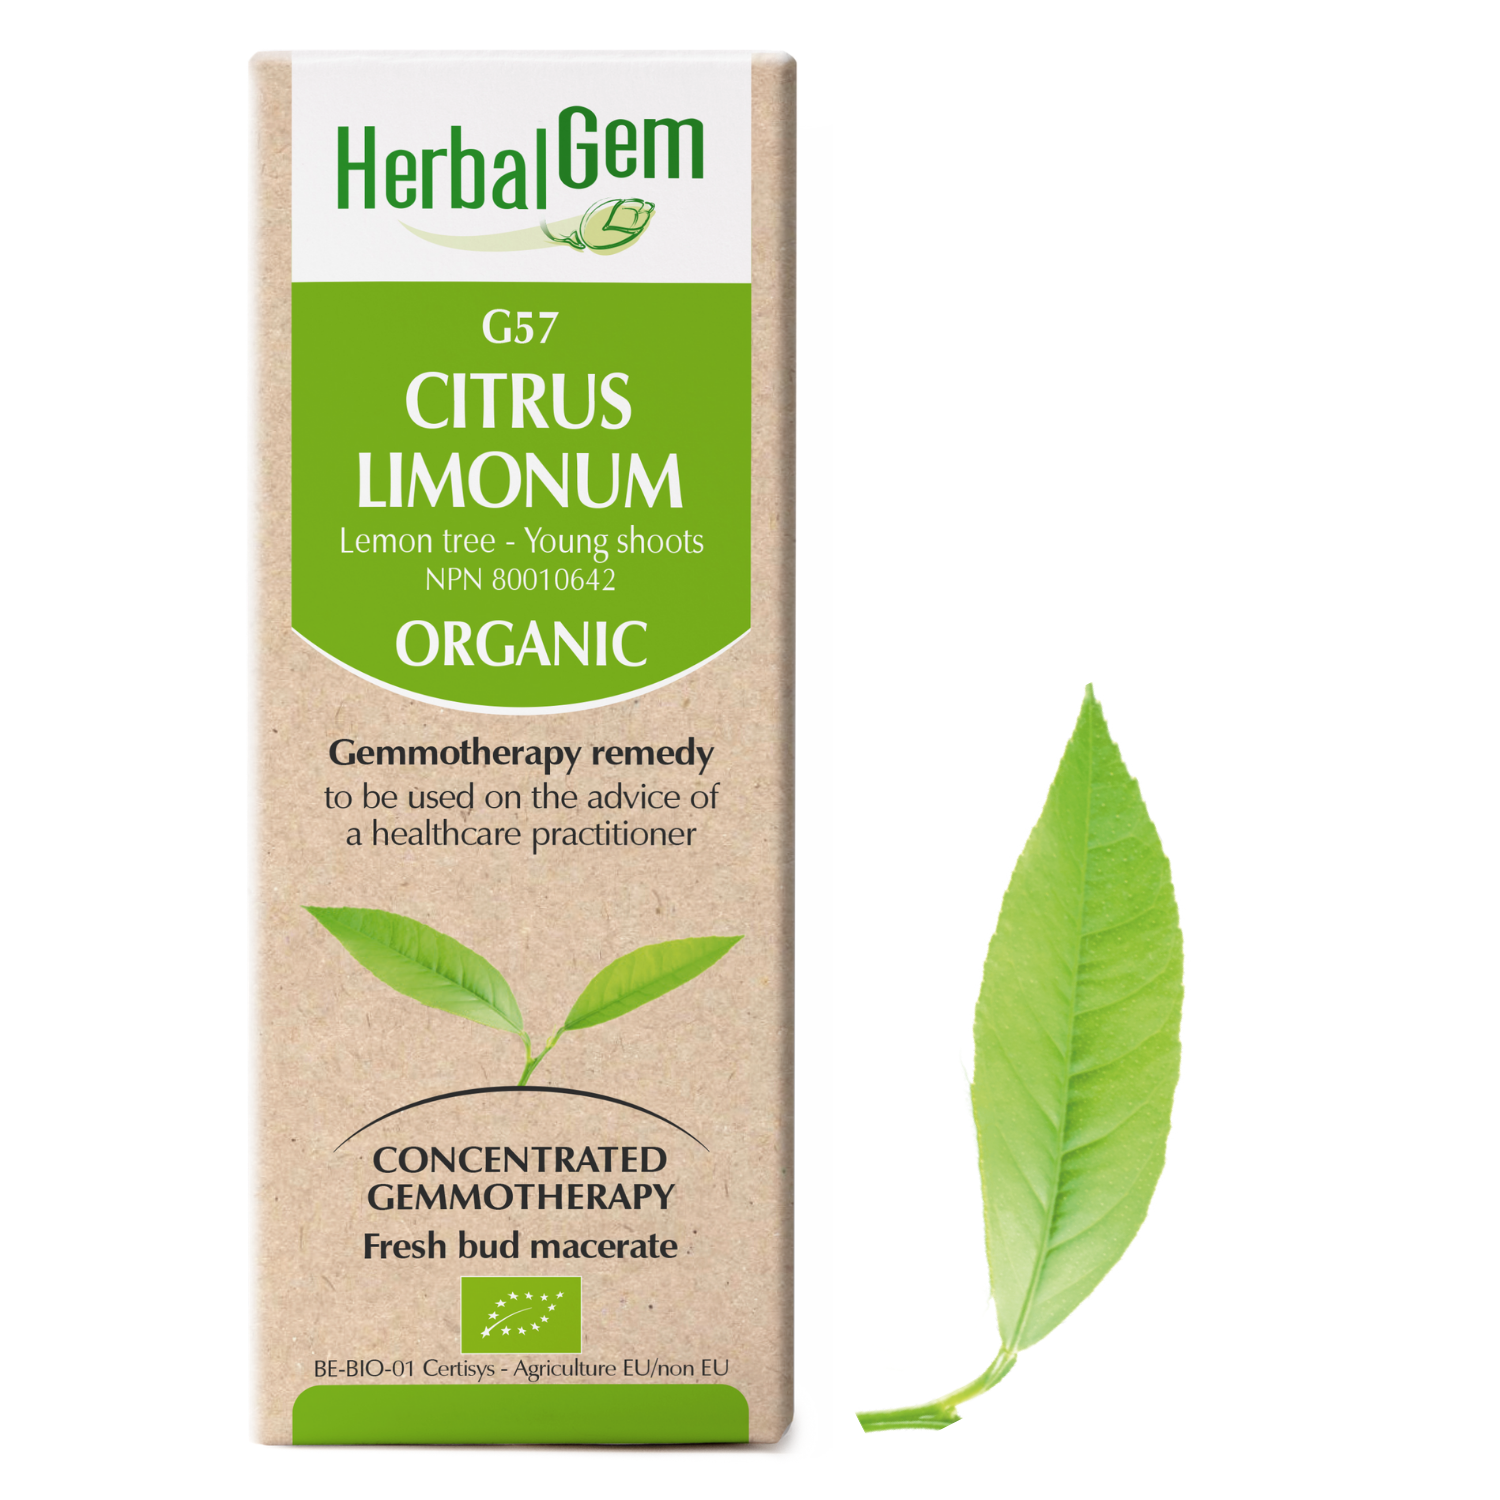 Citrus limonum (Citronnier) G57